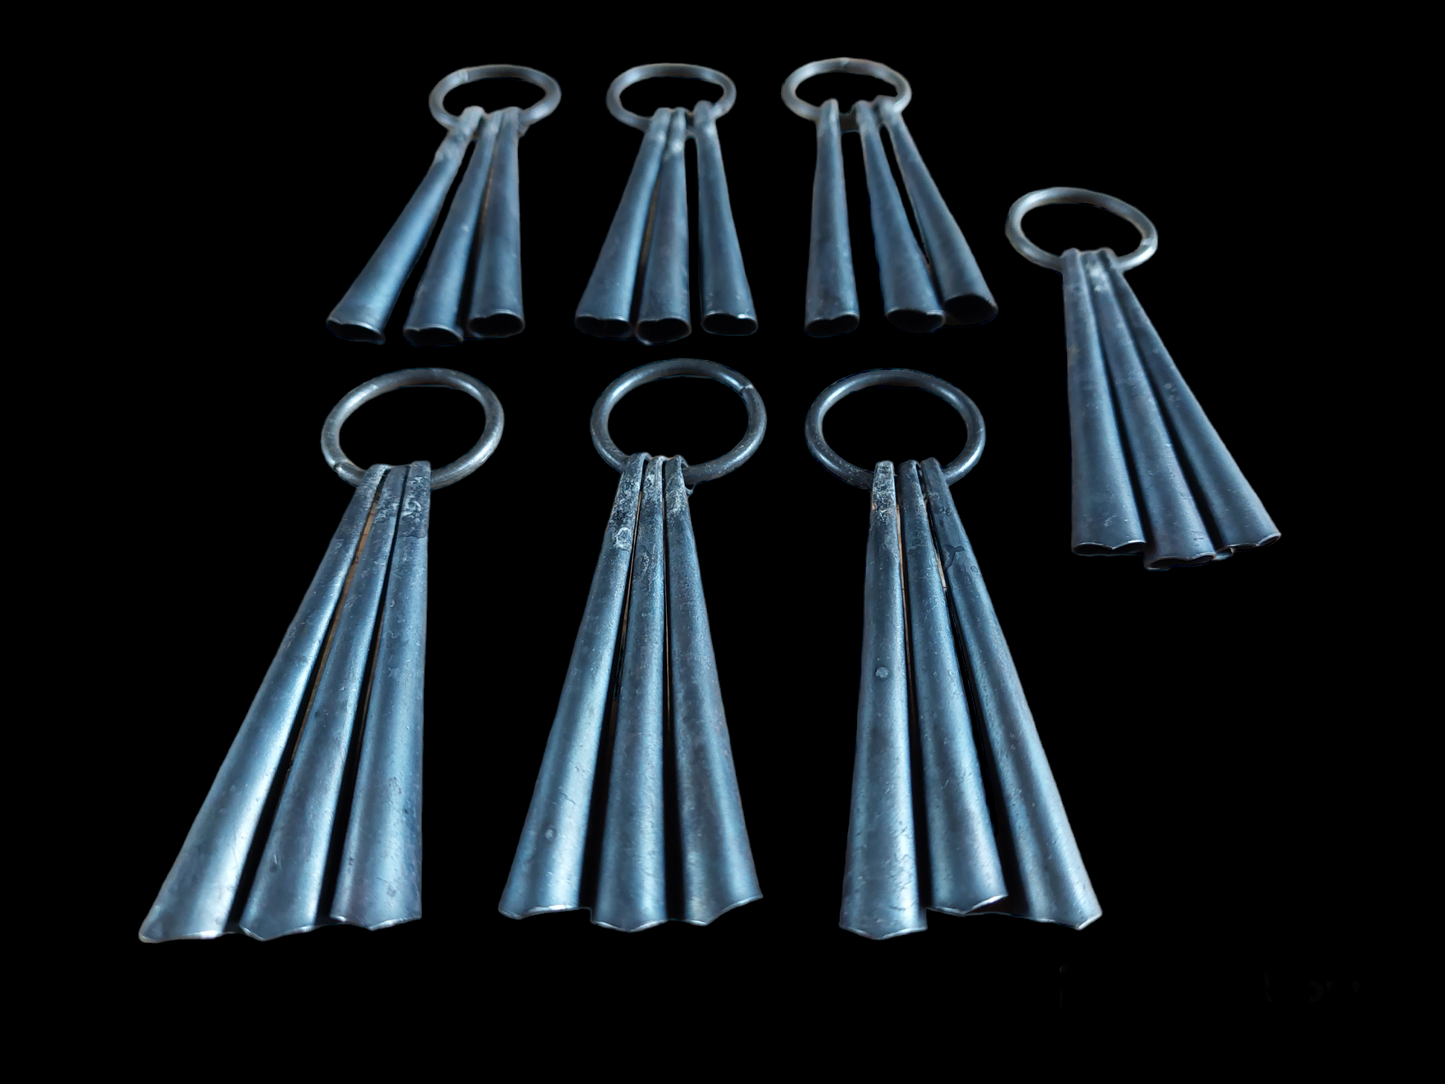 Shamanic cone-shape bells